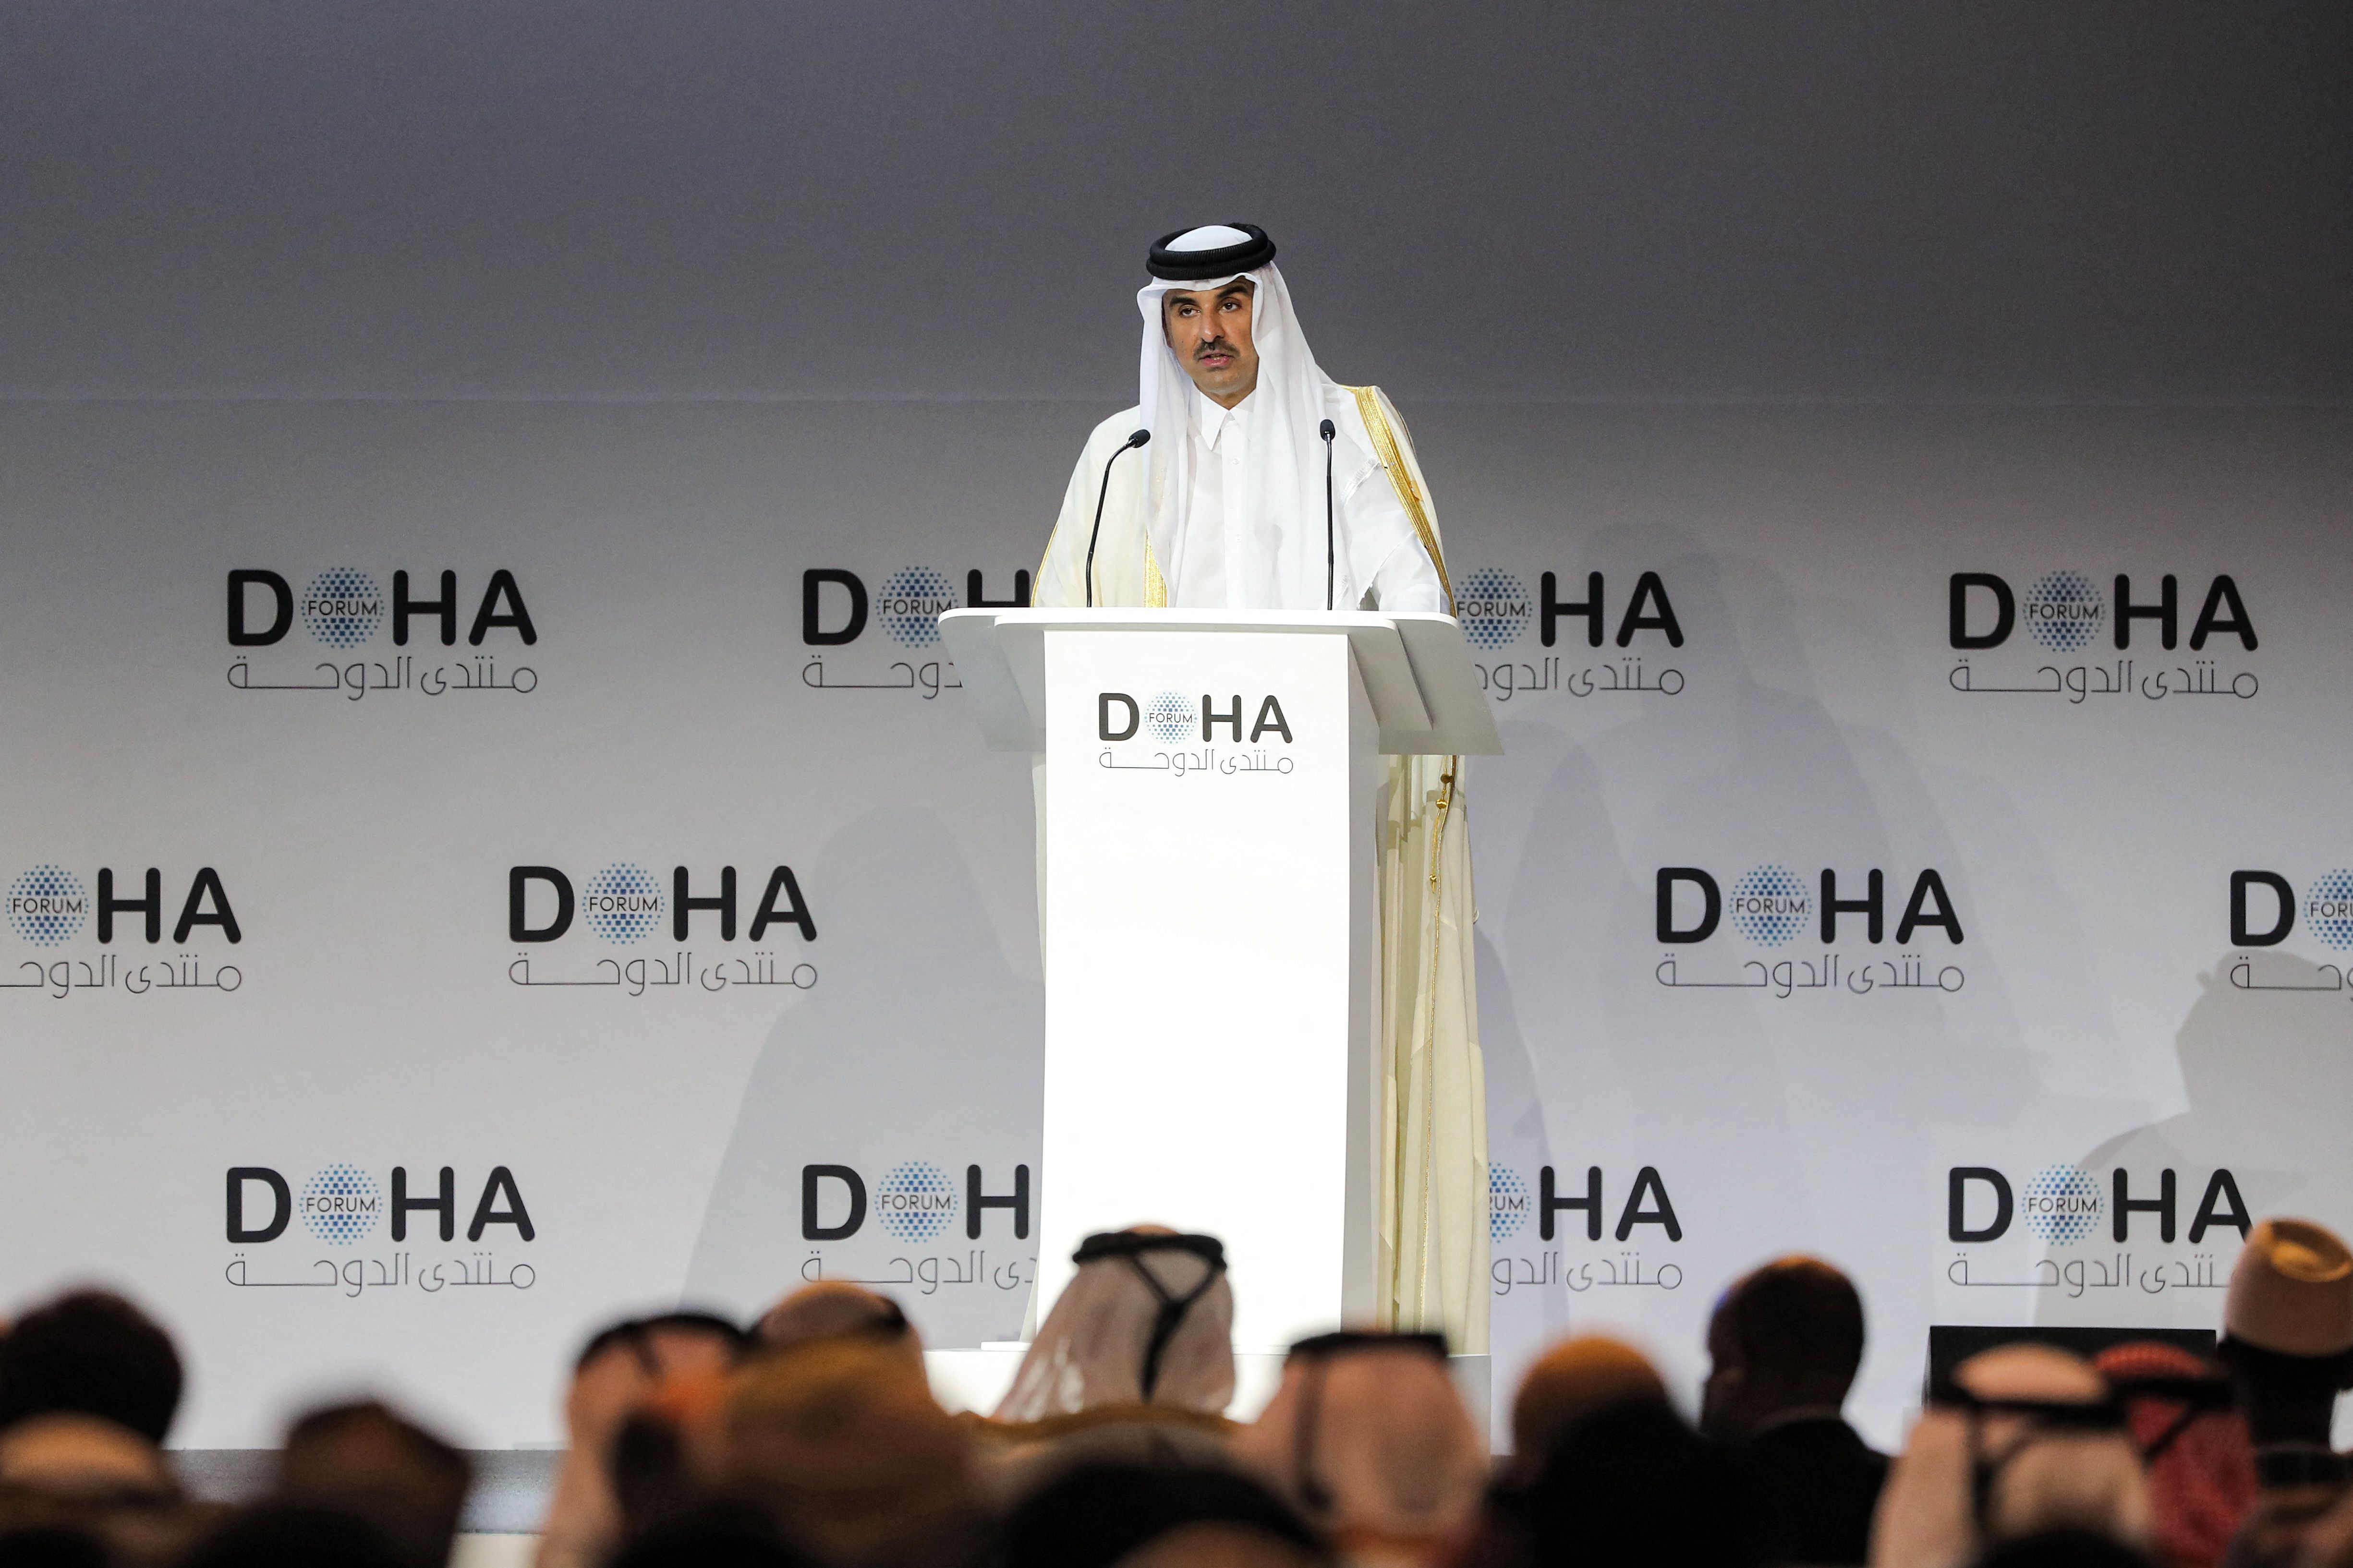 Qatar's Emir Sheikh Tamim bin Hamad al-Thani addresses the Doha Forum in Qatar's capital on March 26.